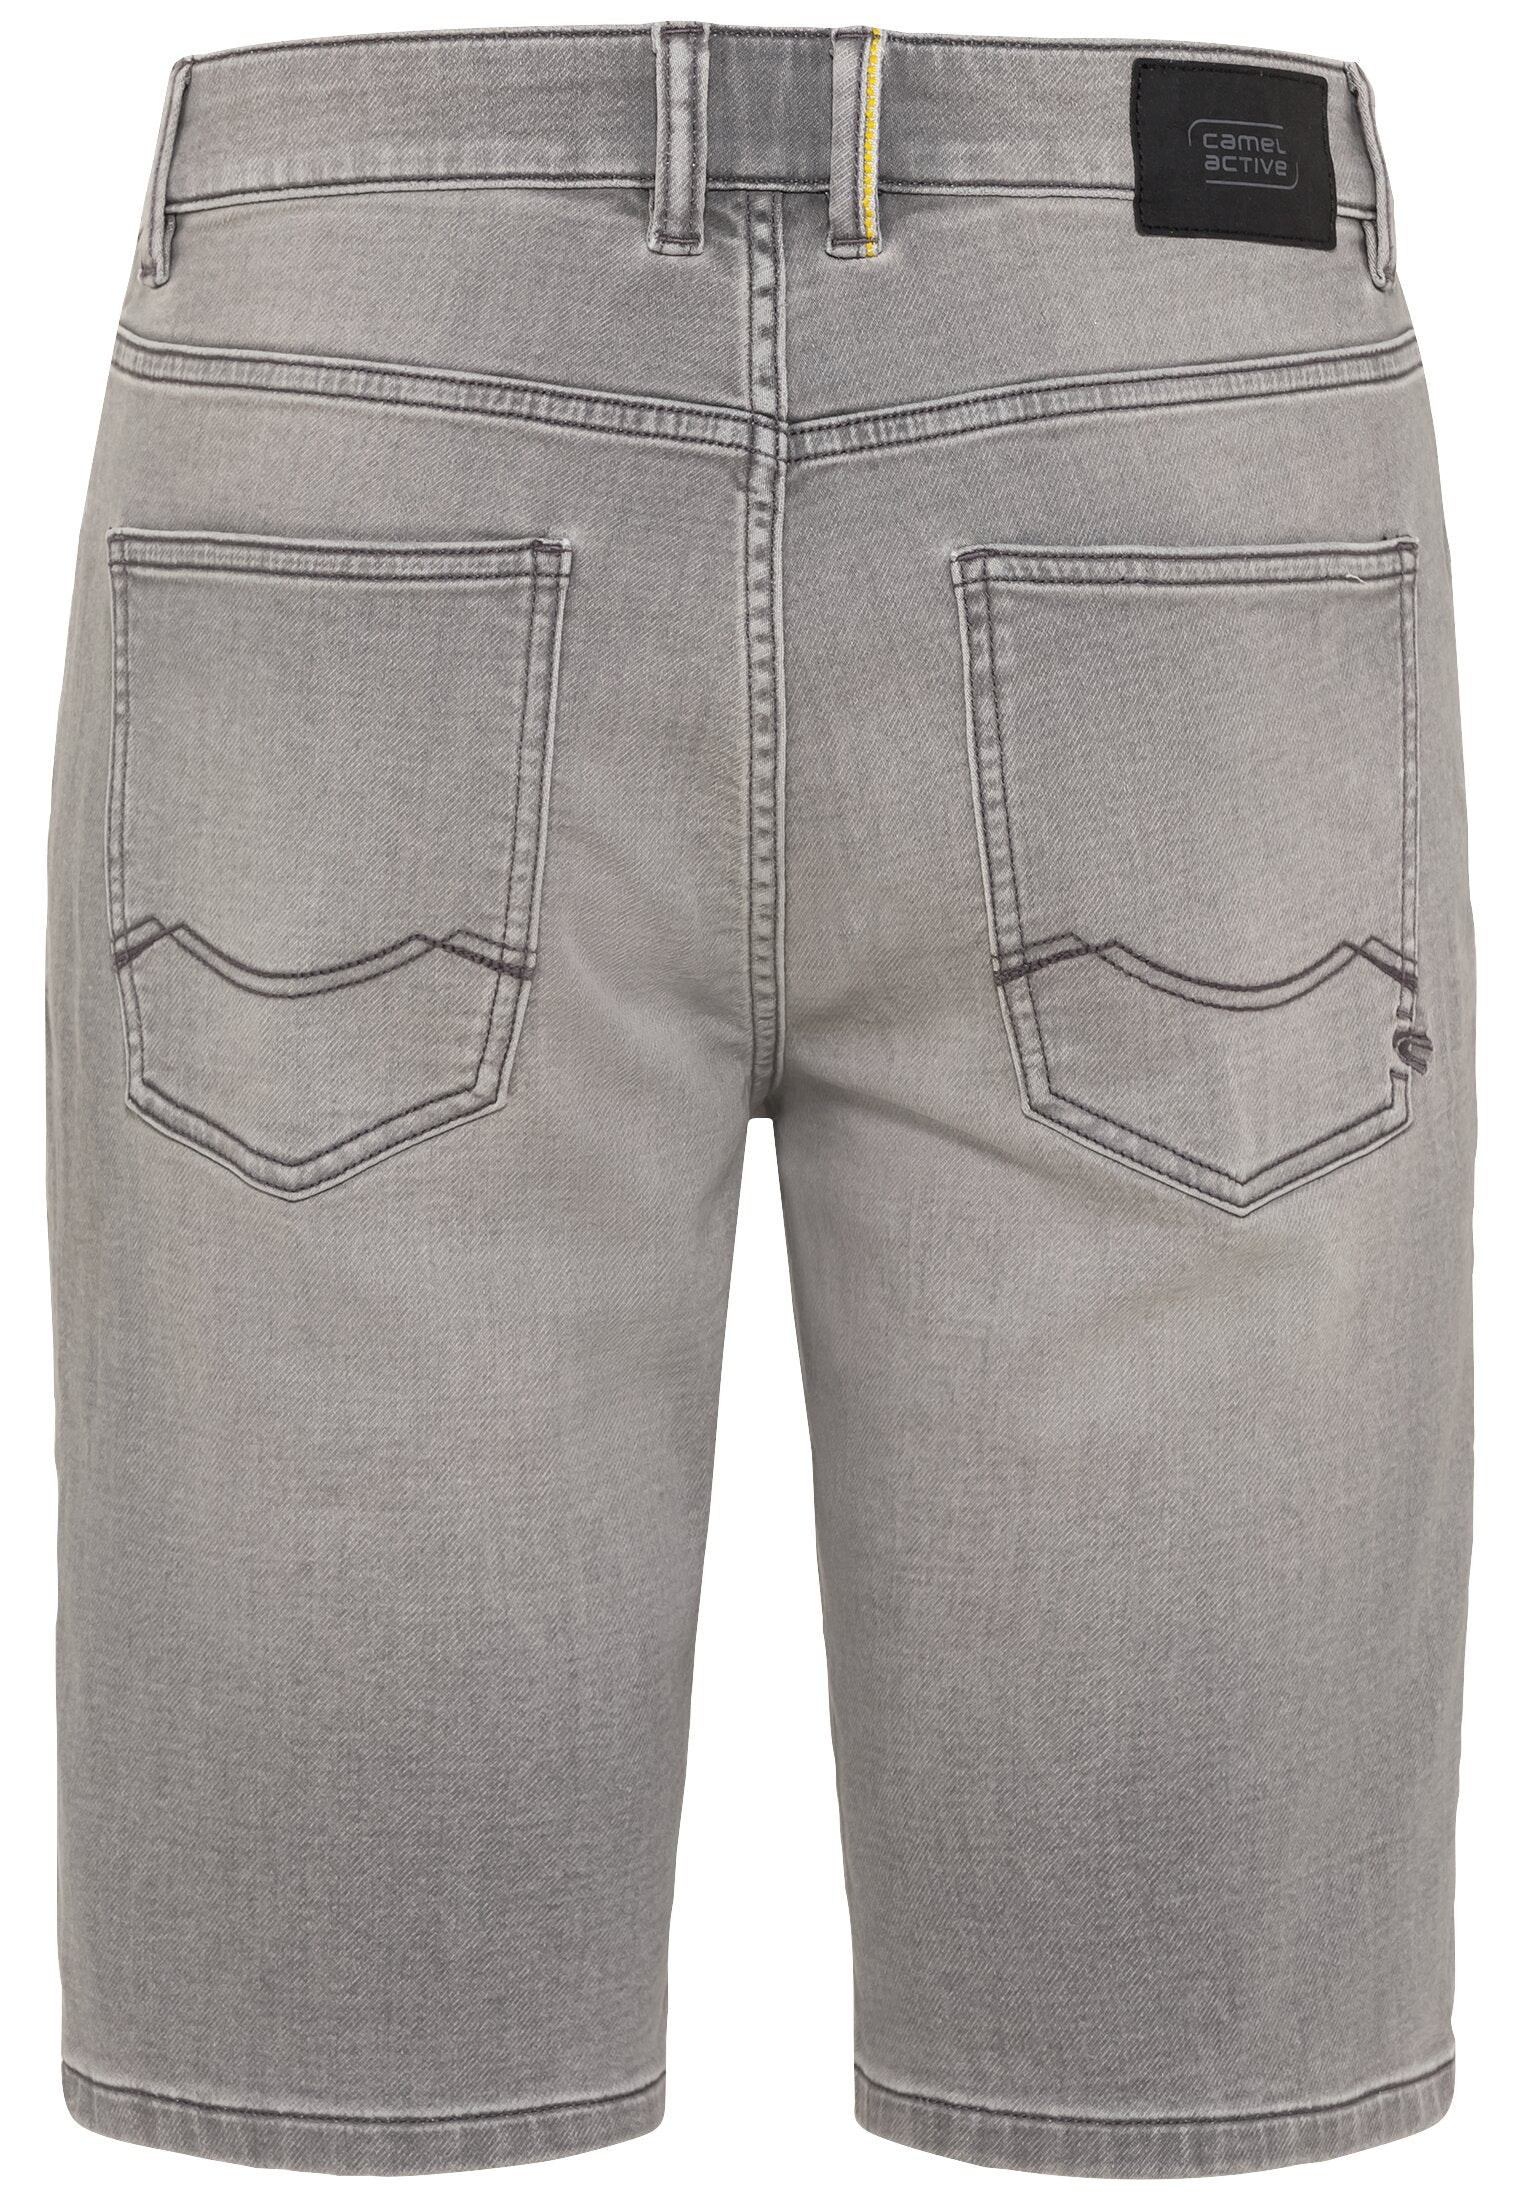 fleXXXactive® Shorts Slim Fit (Stone Grey)